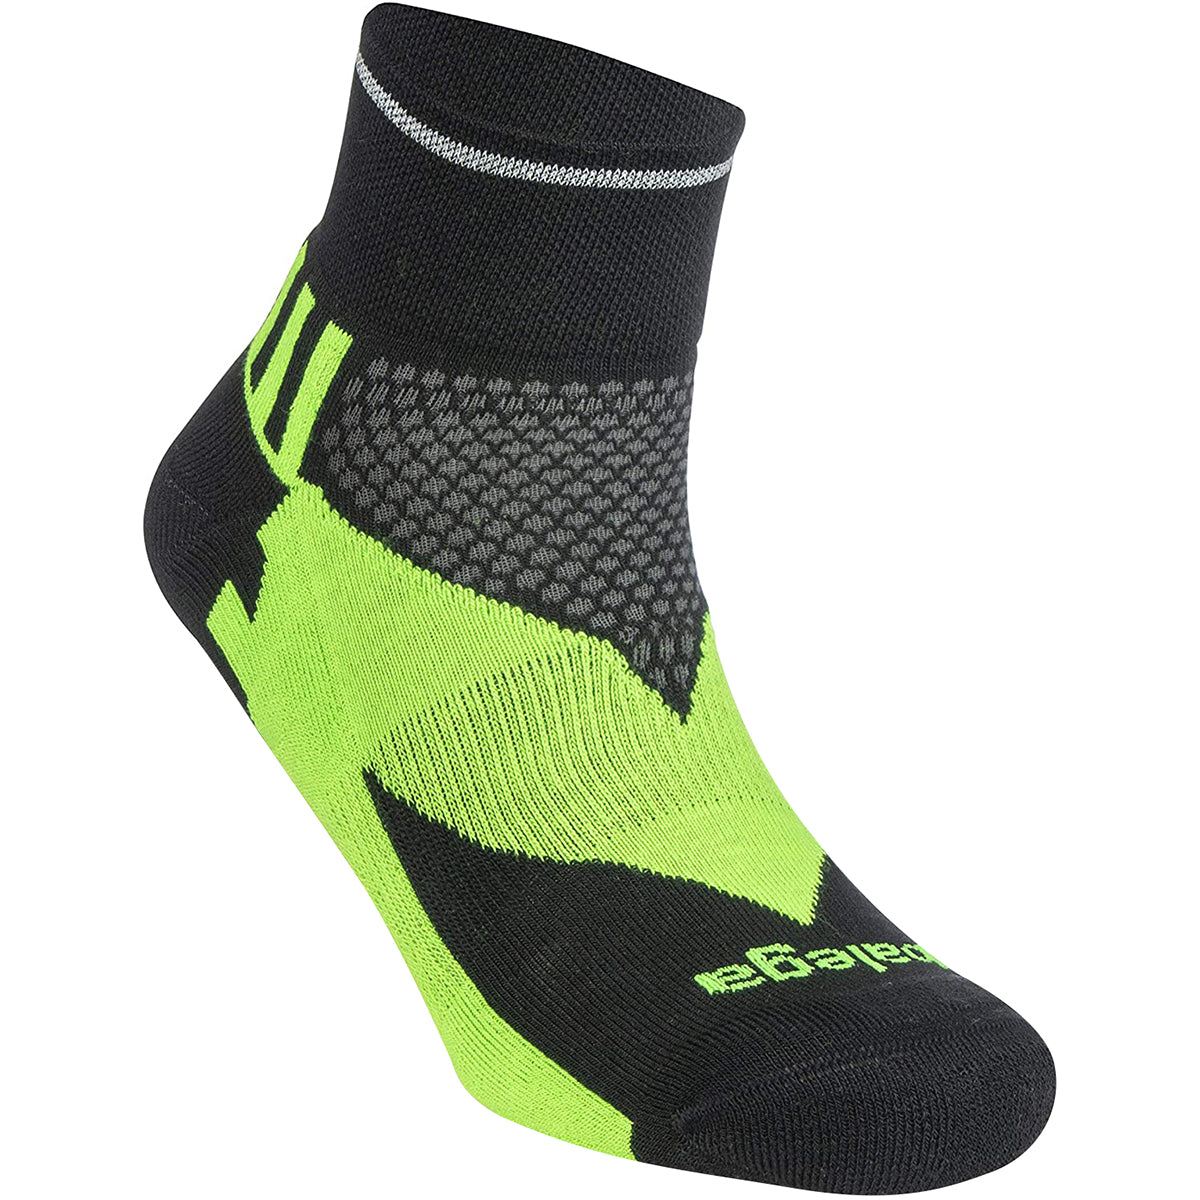 Balega Enduro Reflective Quarter Length Running Socks - Black/Neon Green Balega